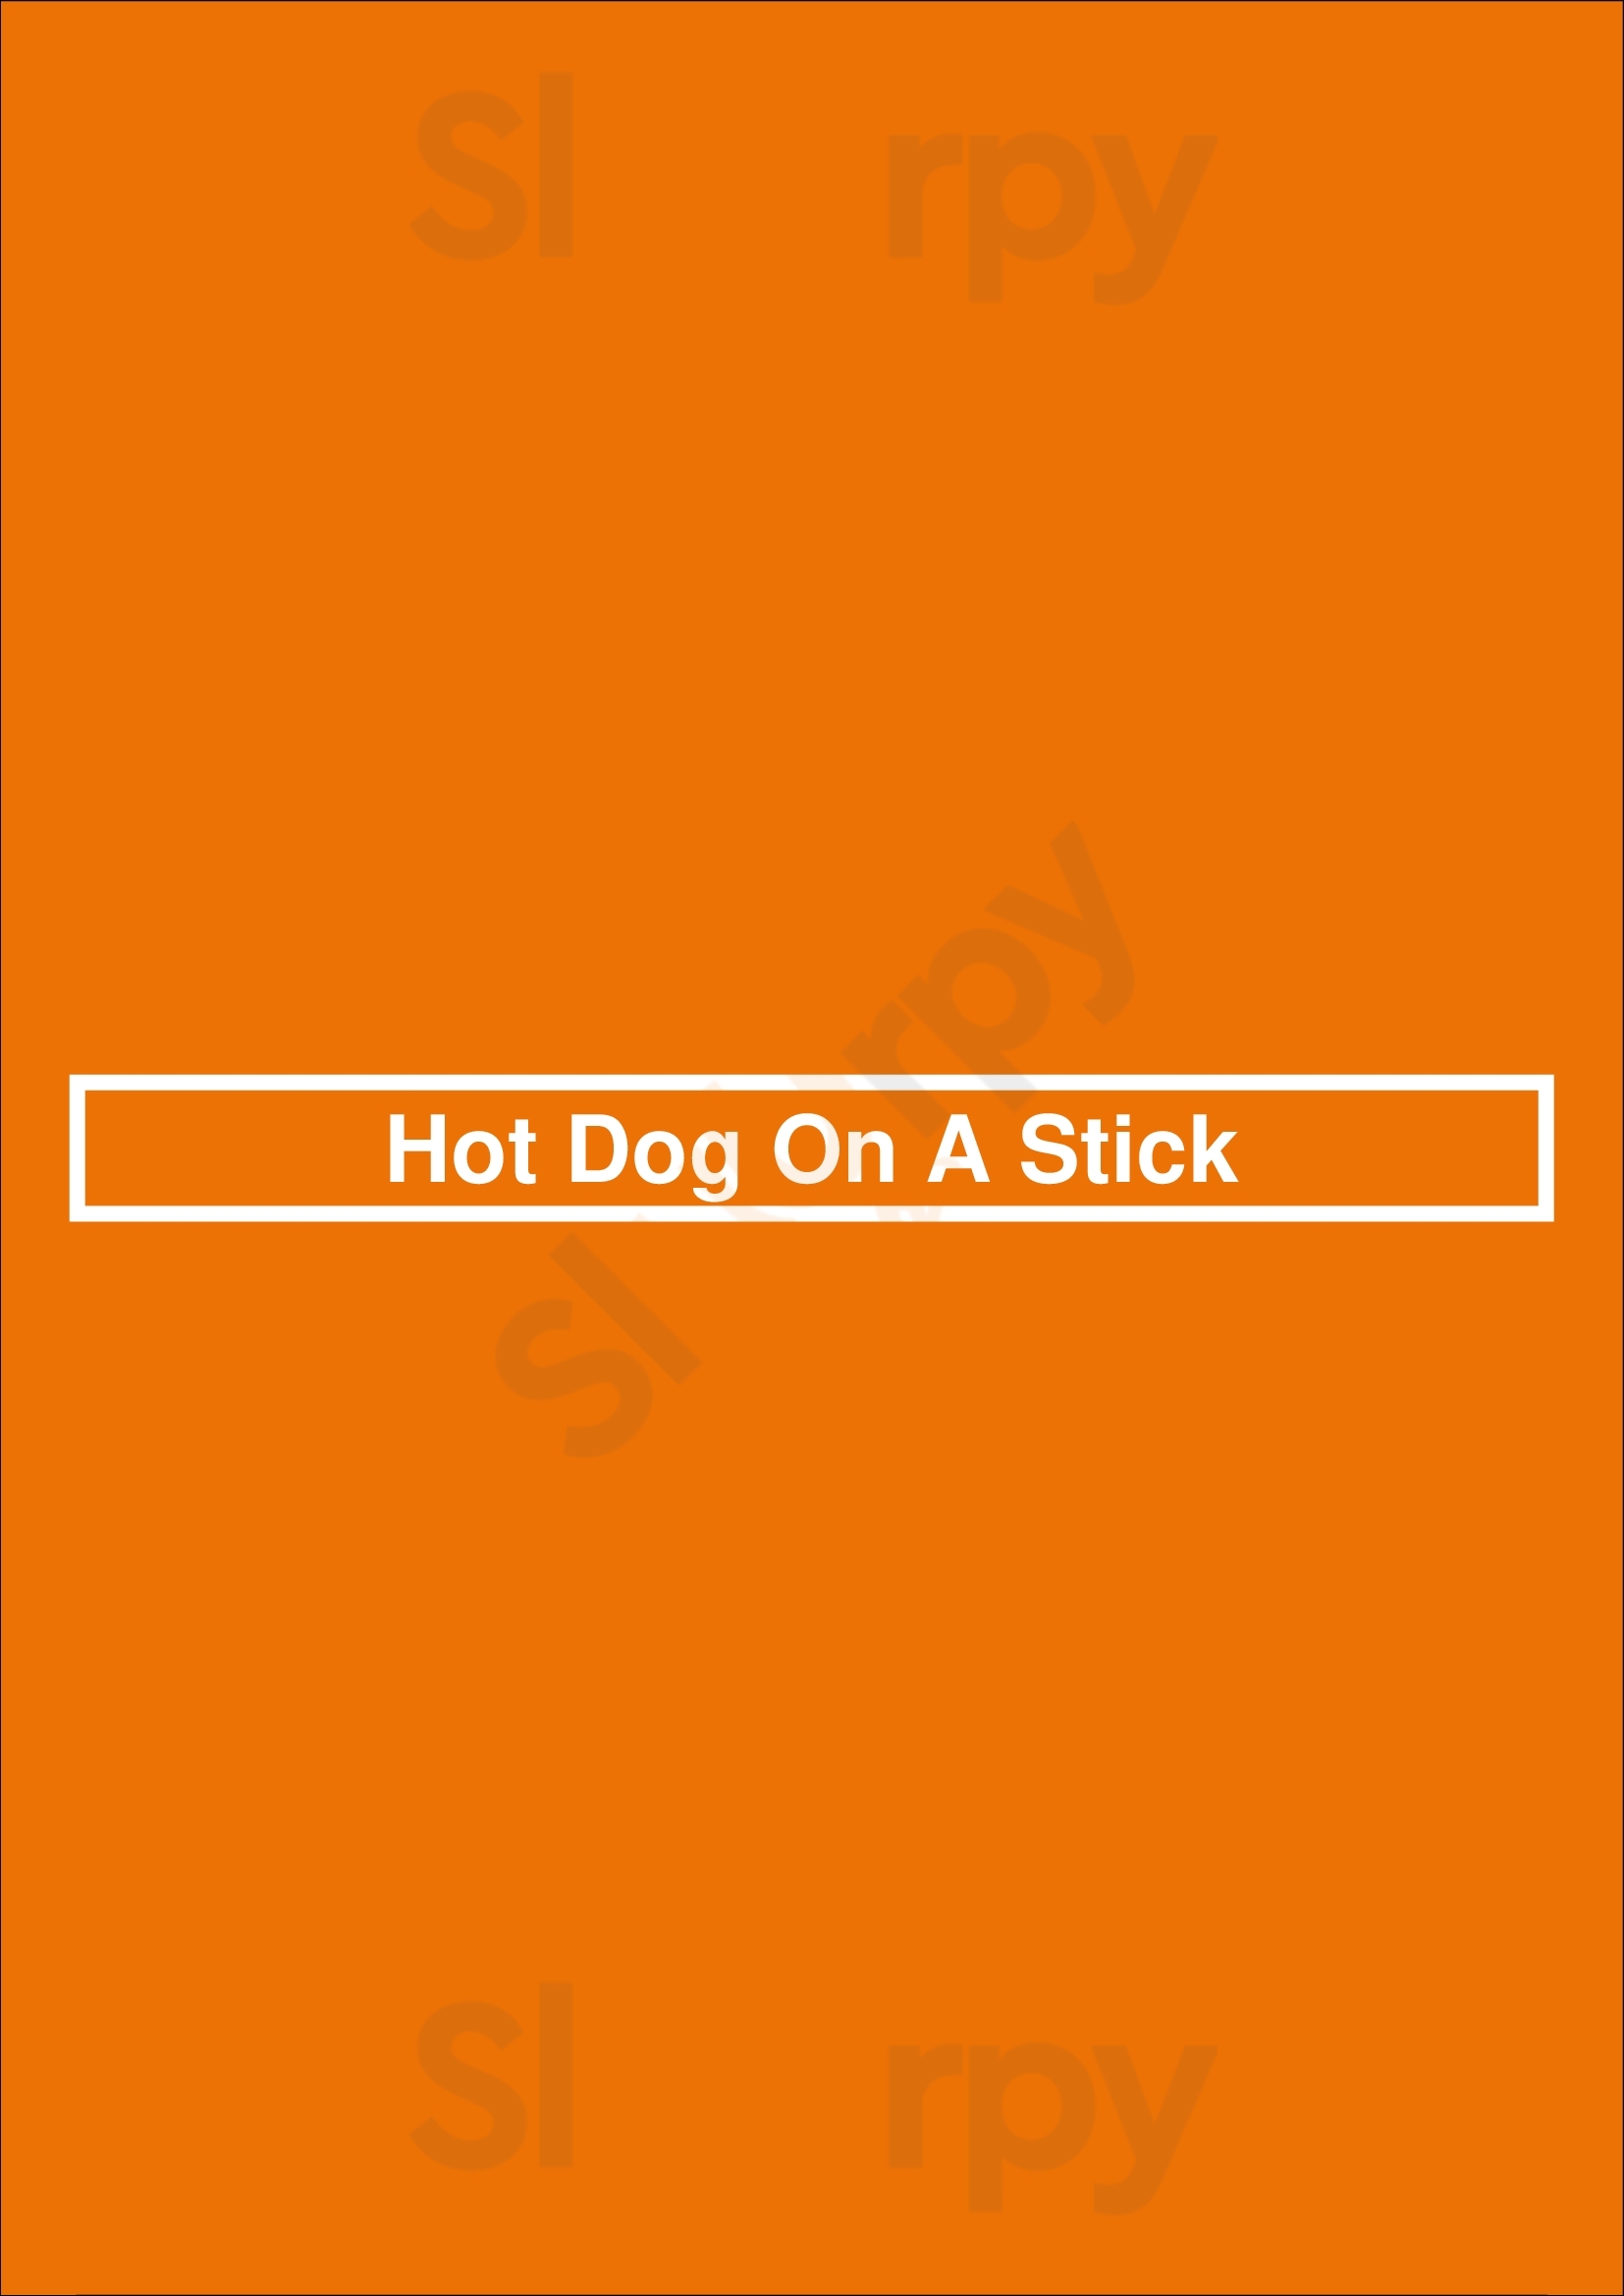 Hot Dog On A Stick Henderson Menu - 1